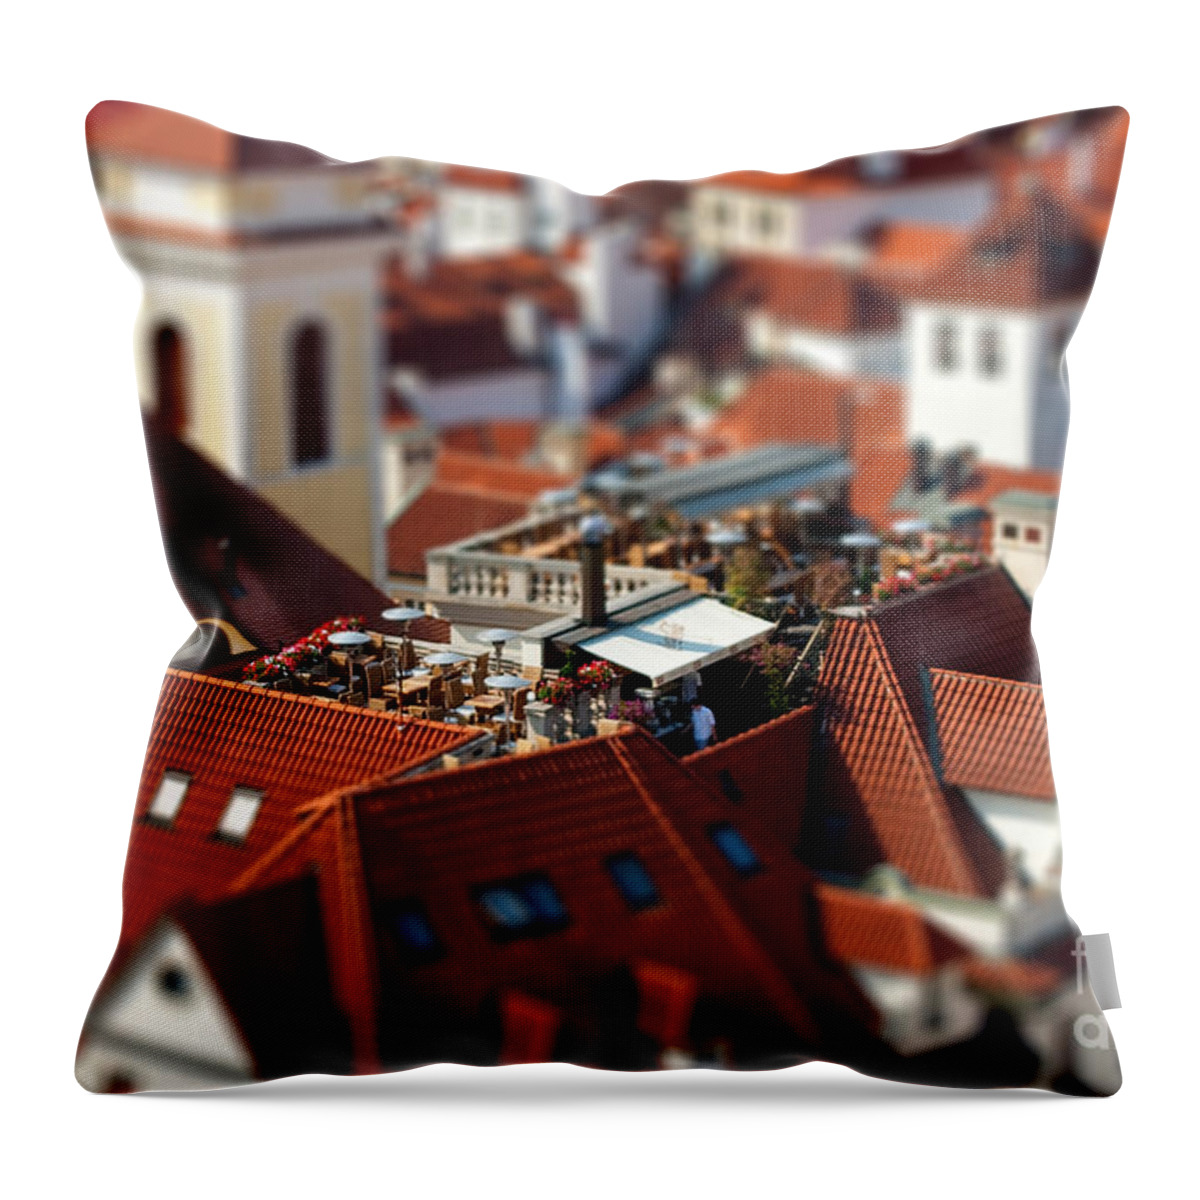 Czech Republic Throw Pillow featuring the photograph Tiny Roof Restaurant by Joerg Lingnau